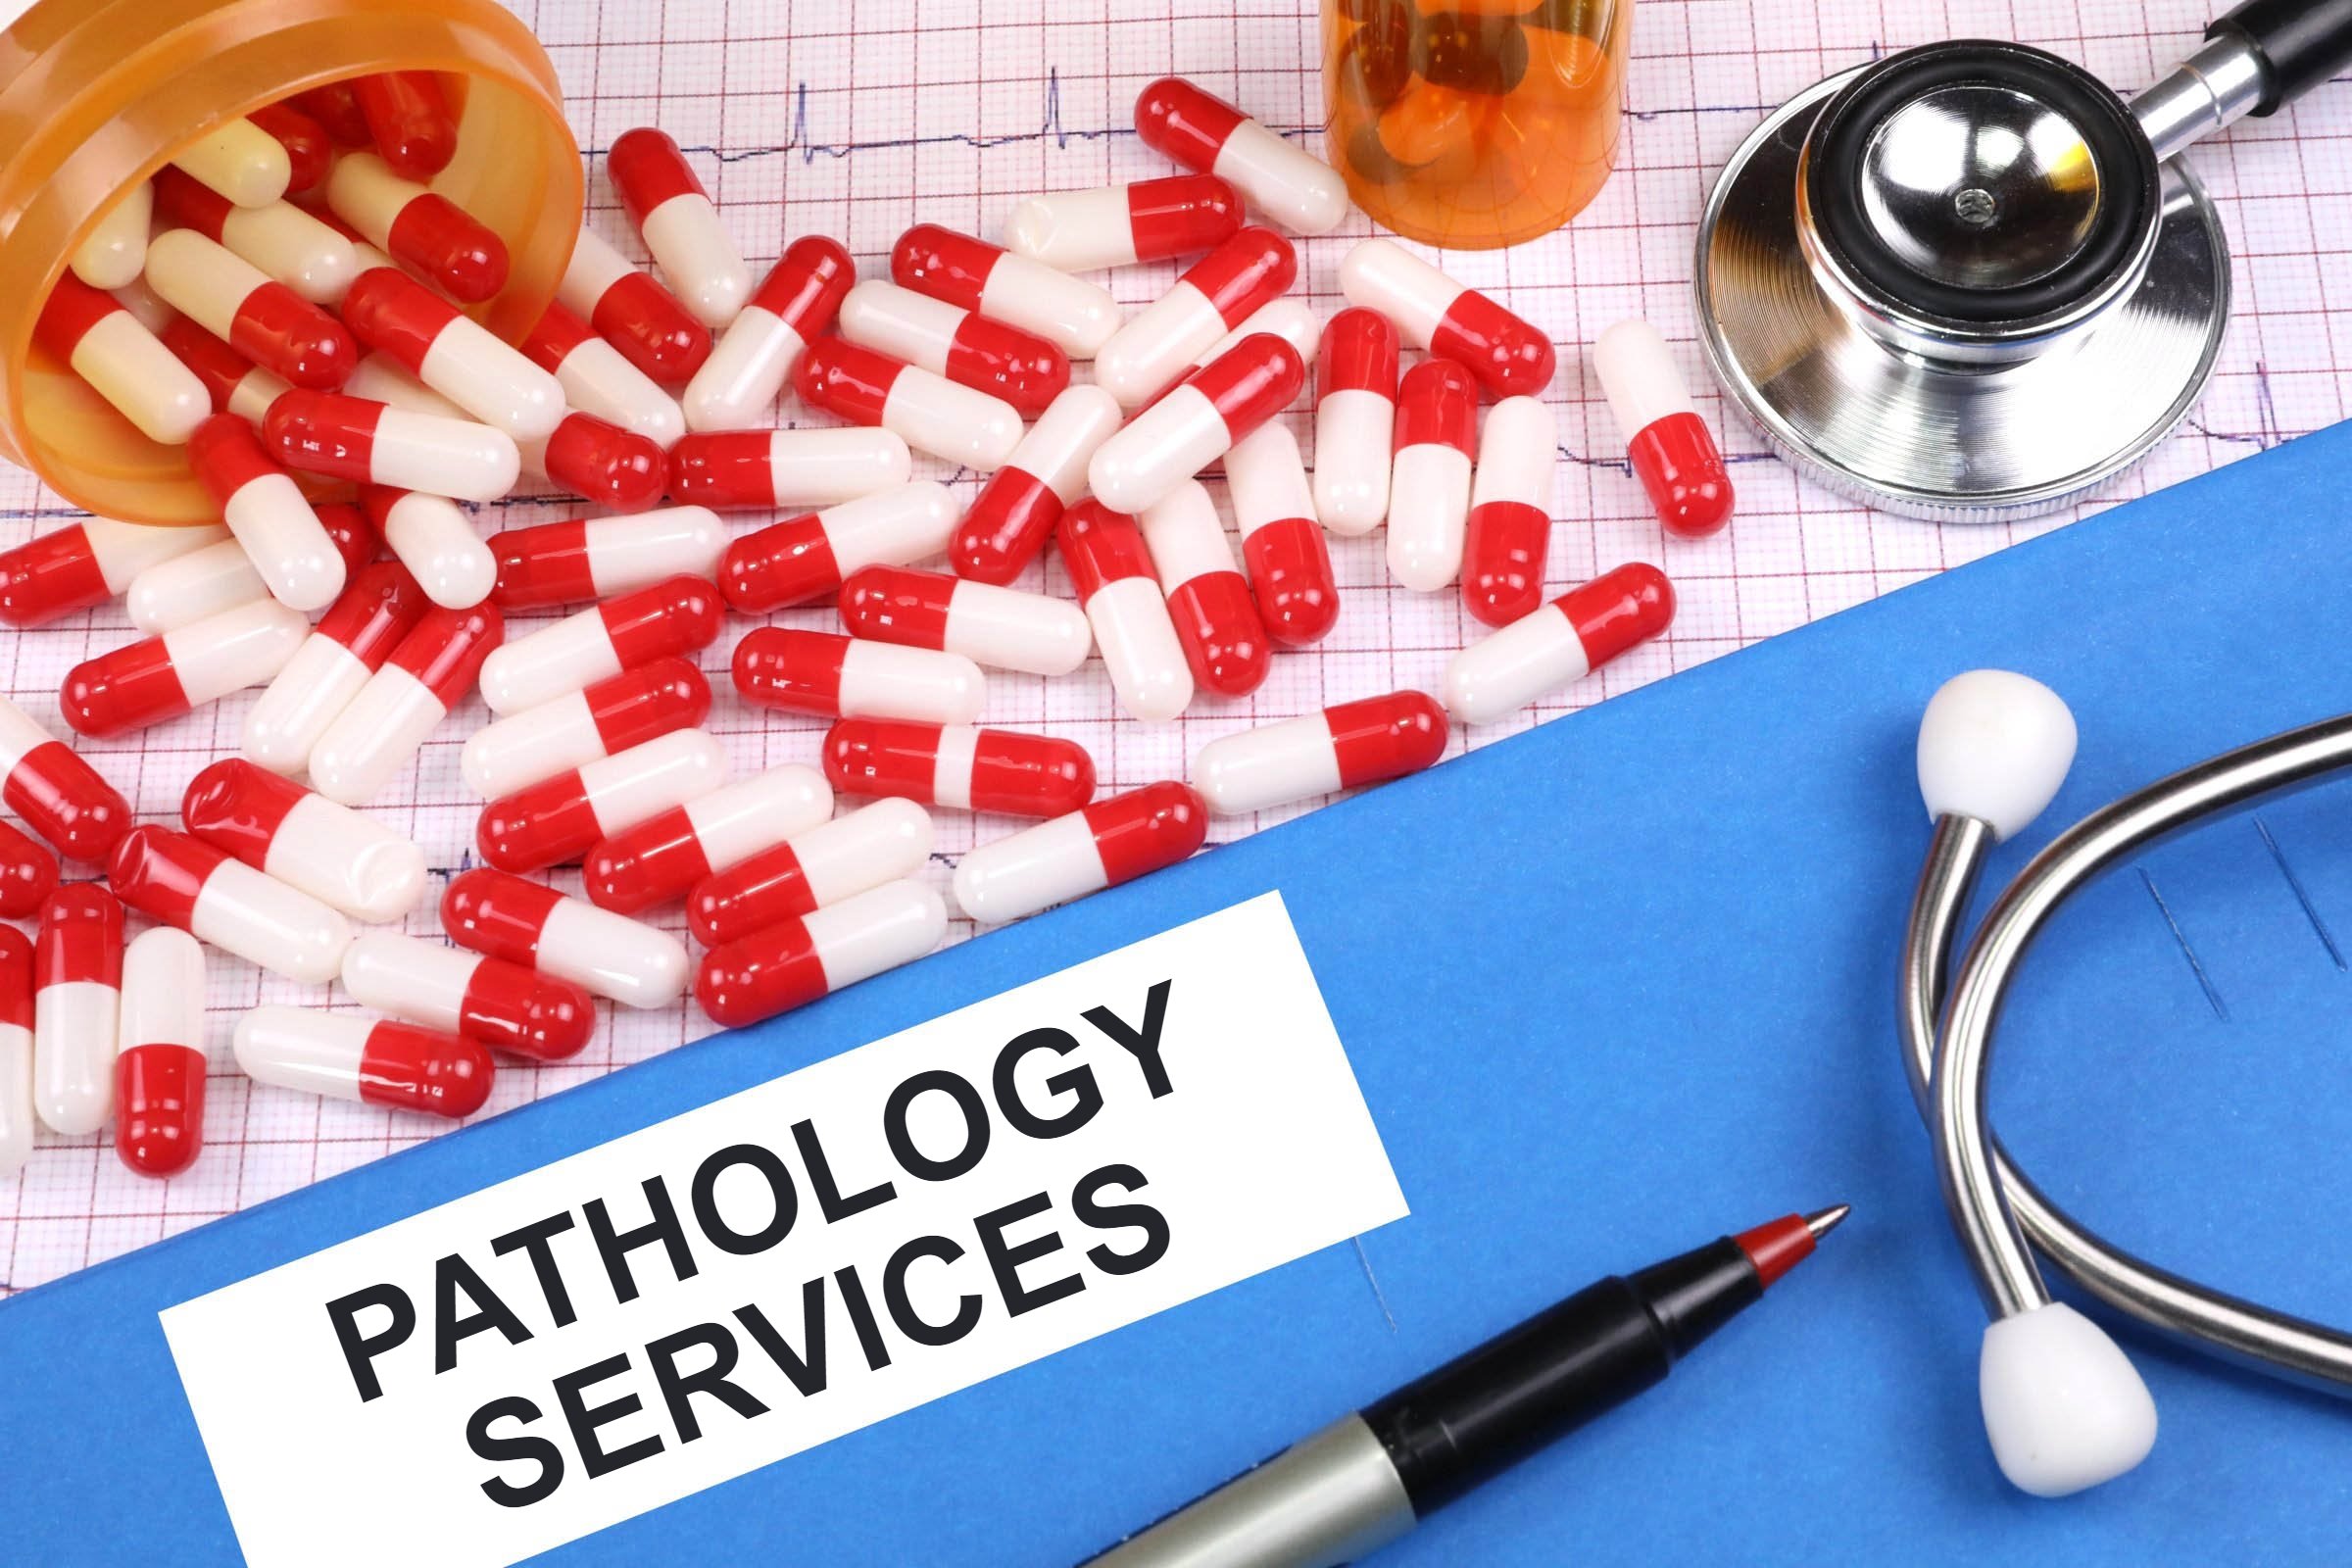 pathology services